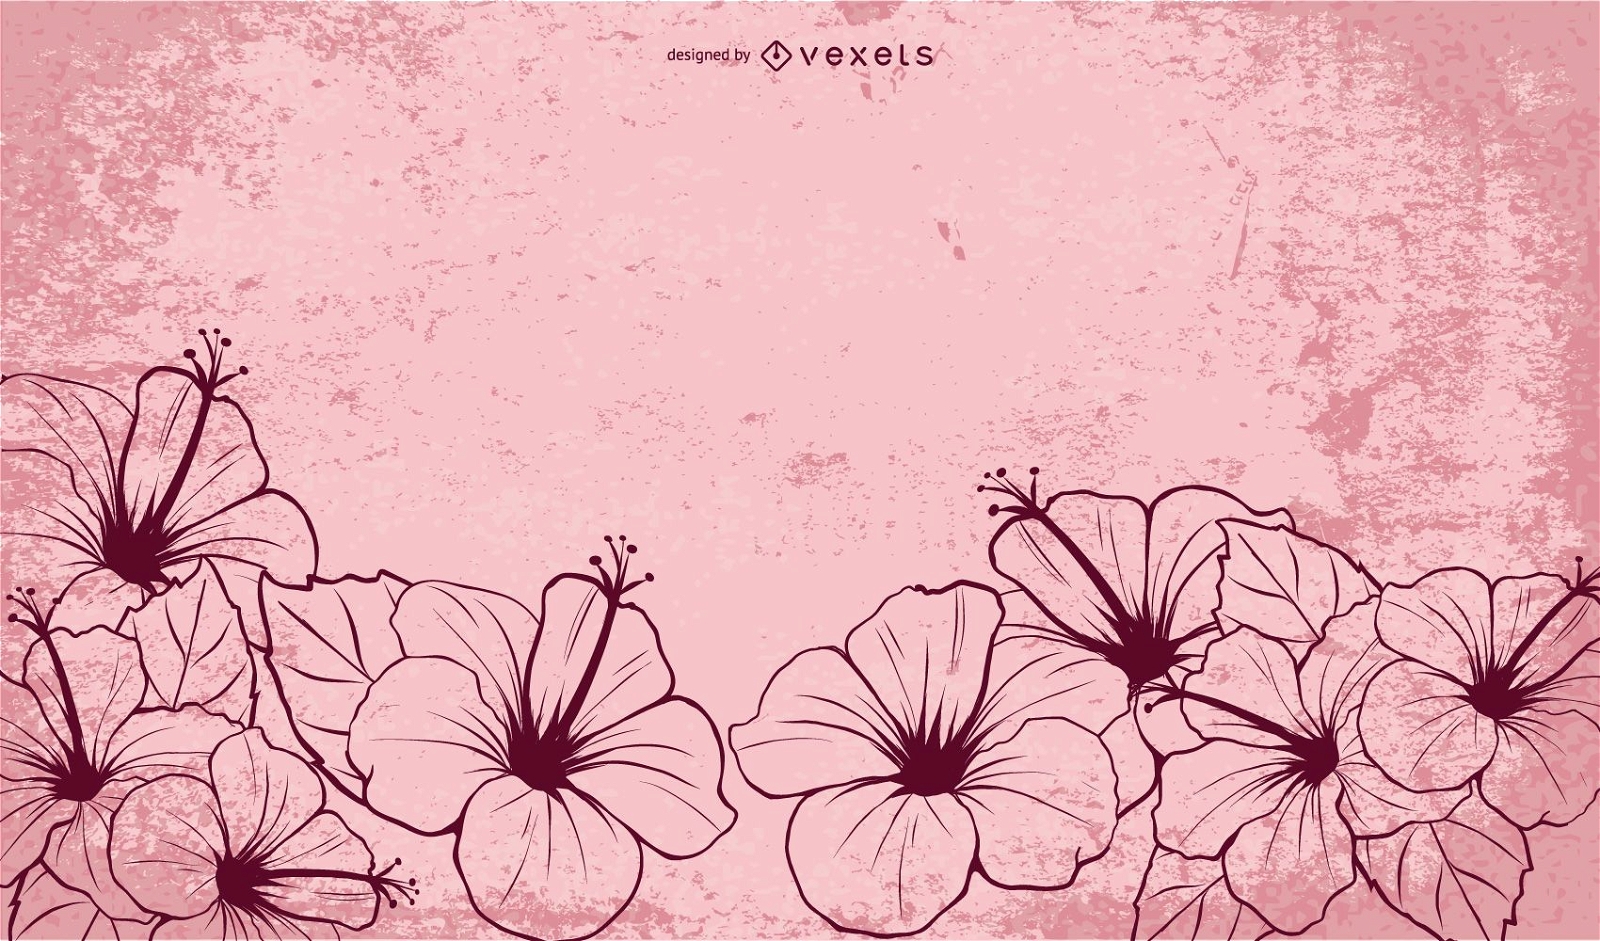 Flores de hibisco ilustradas dibujadas a mano